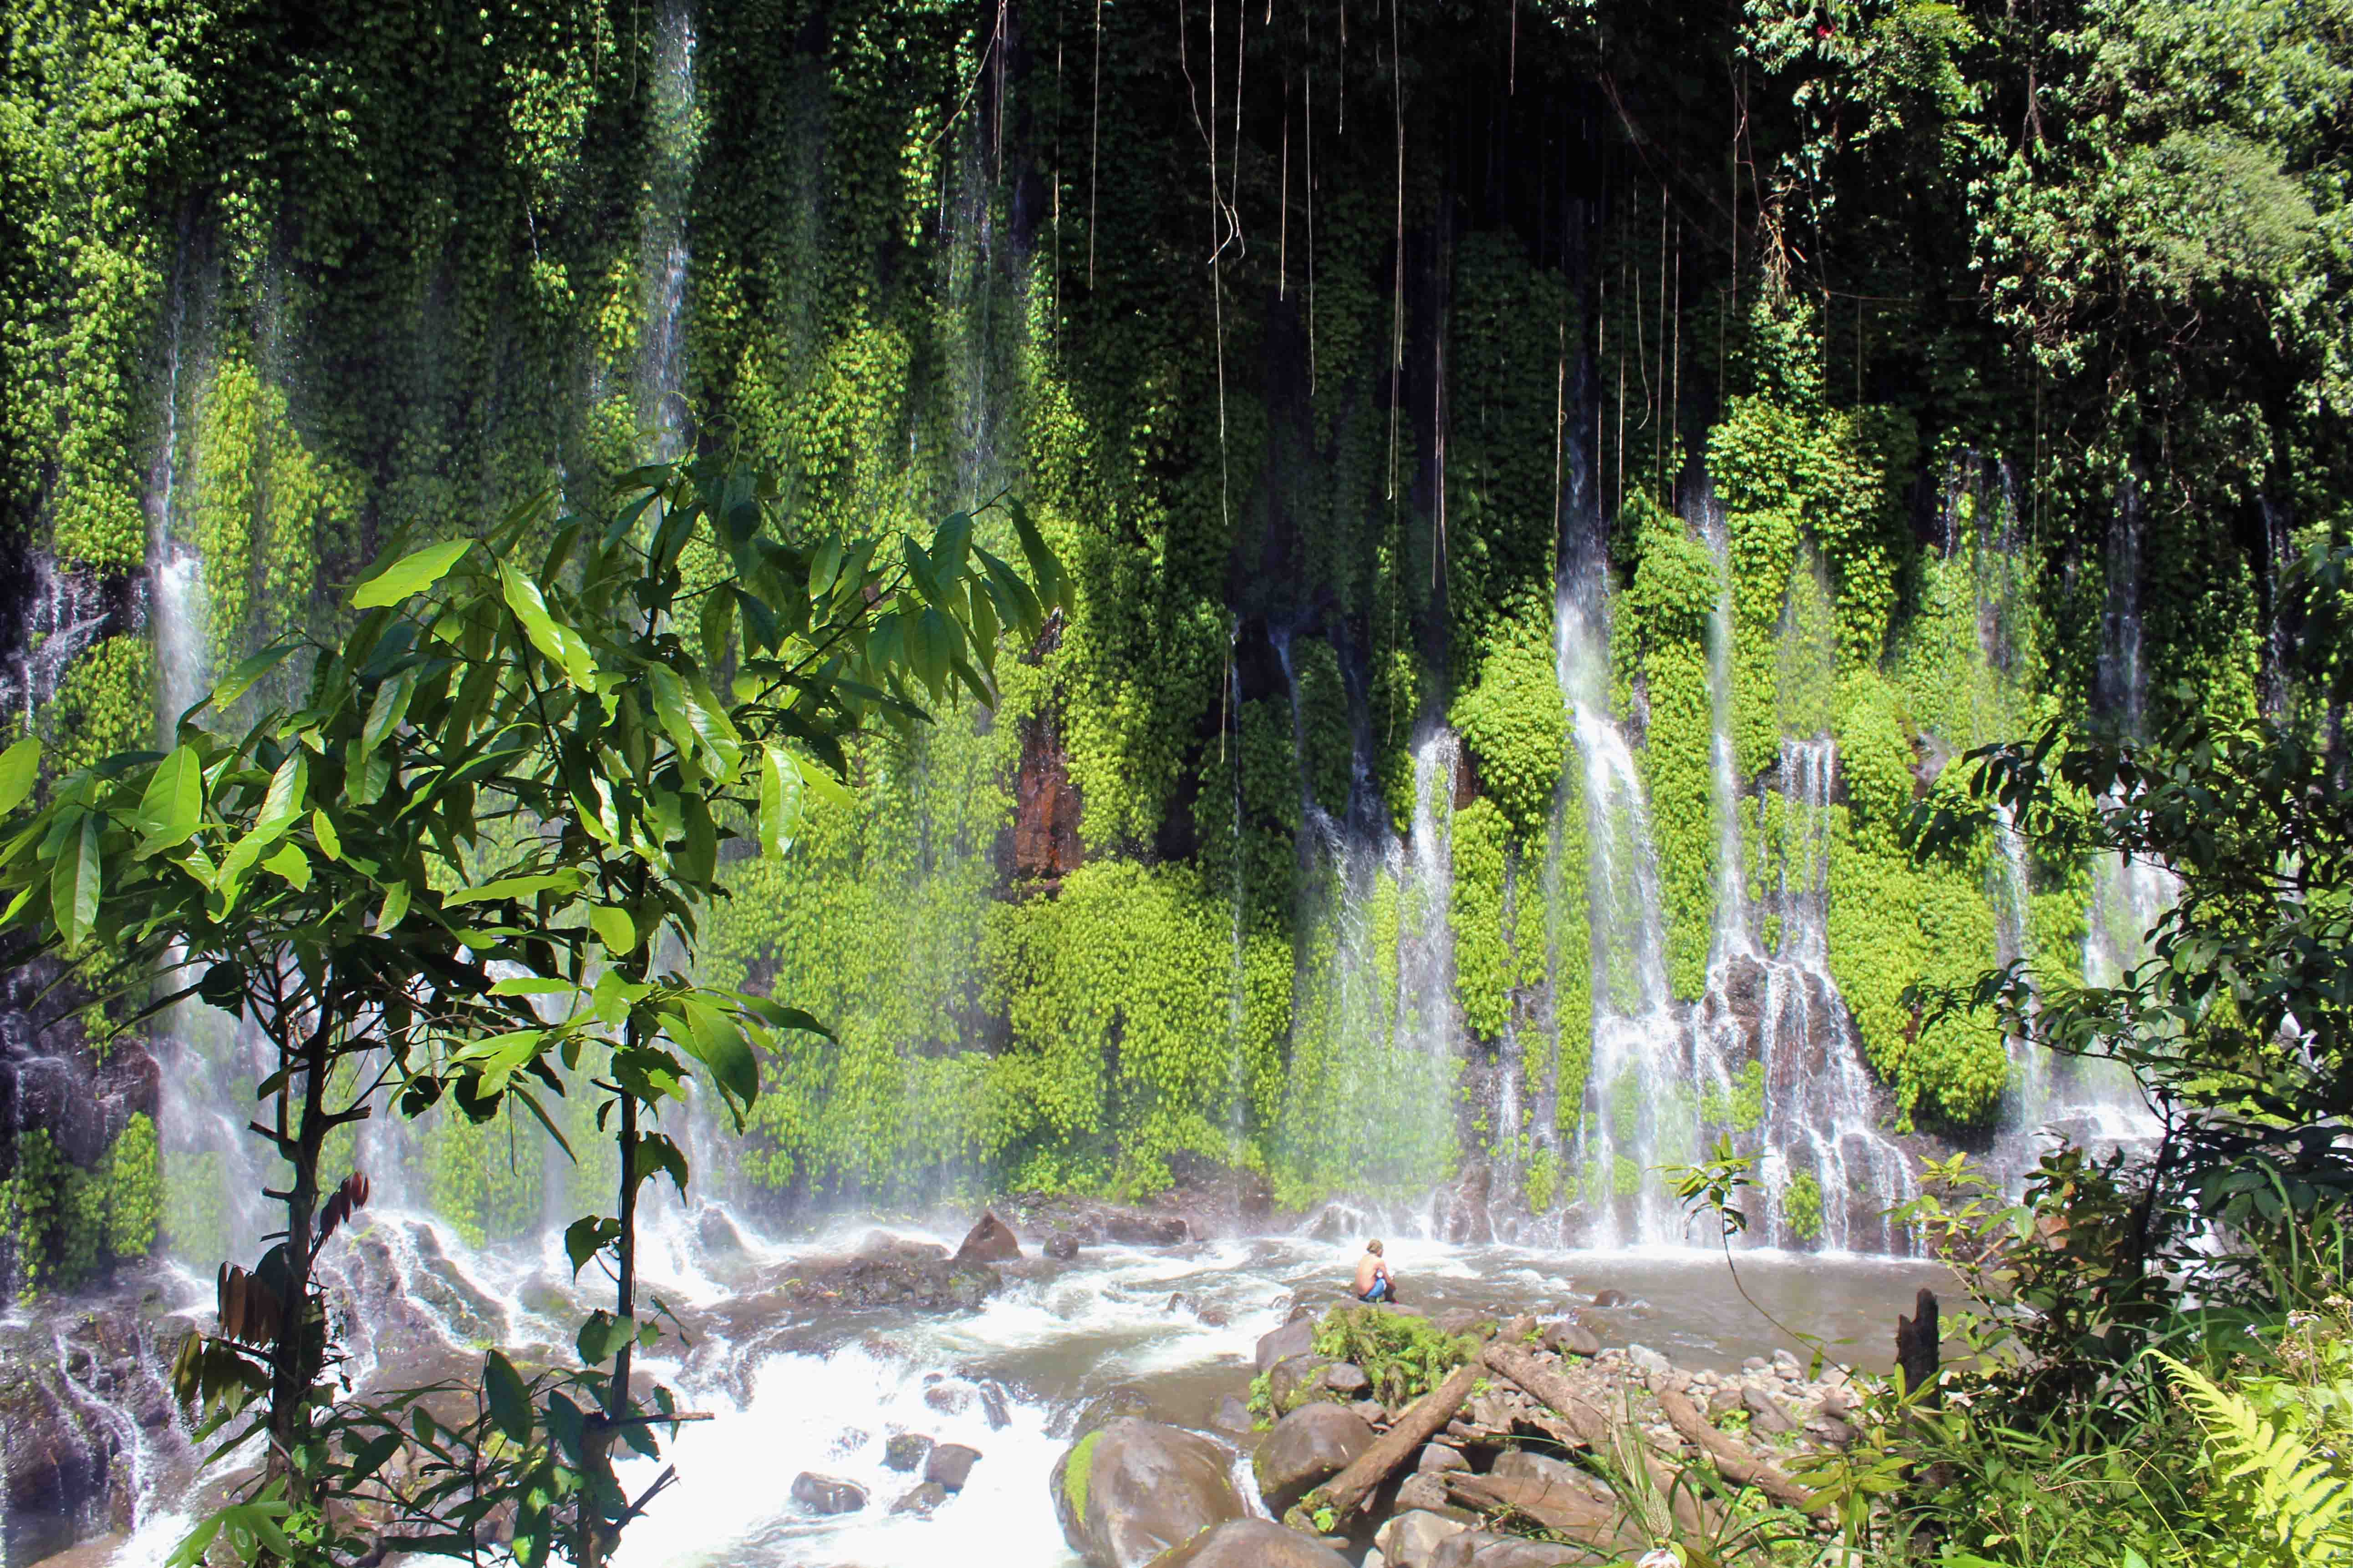 Asik-asik Falls in Alamada, North Cotabato. Photo courtesy of The Awkward Traveler